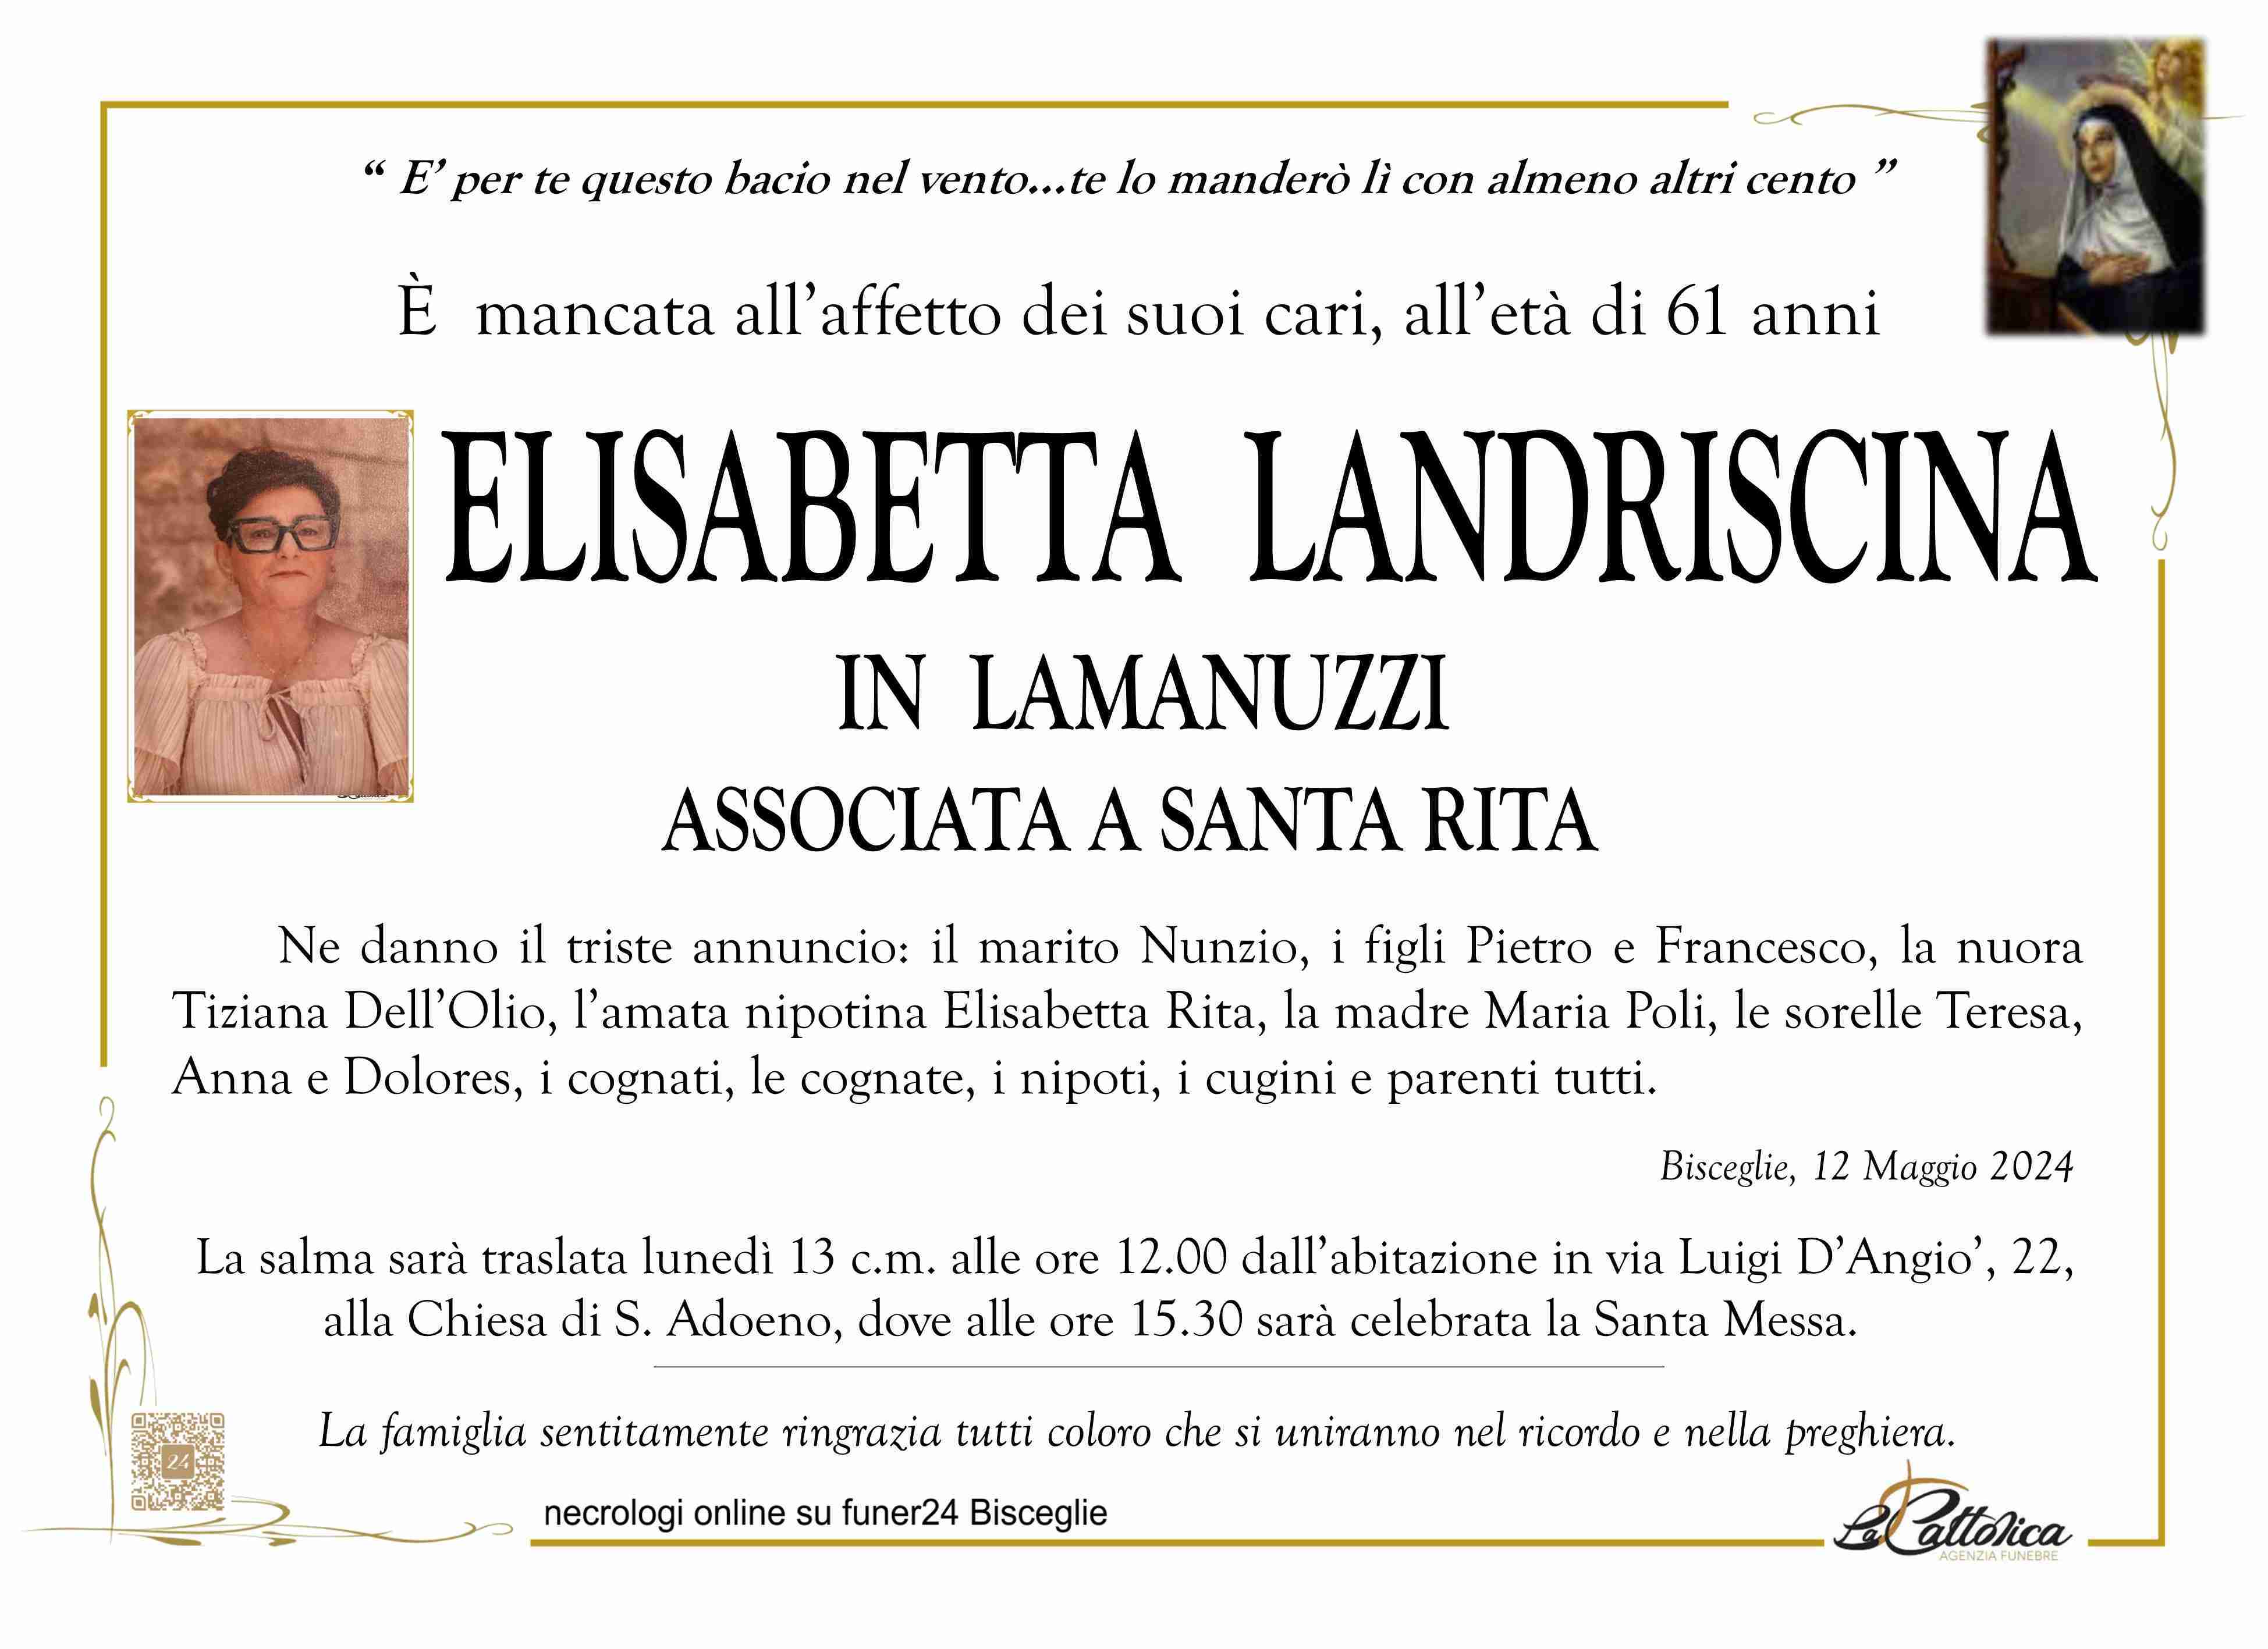 Elisabetta Landriscina